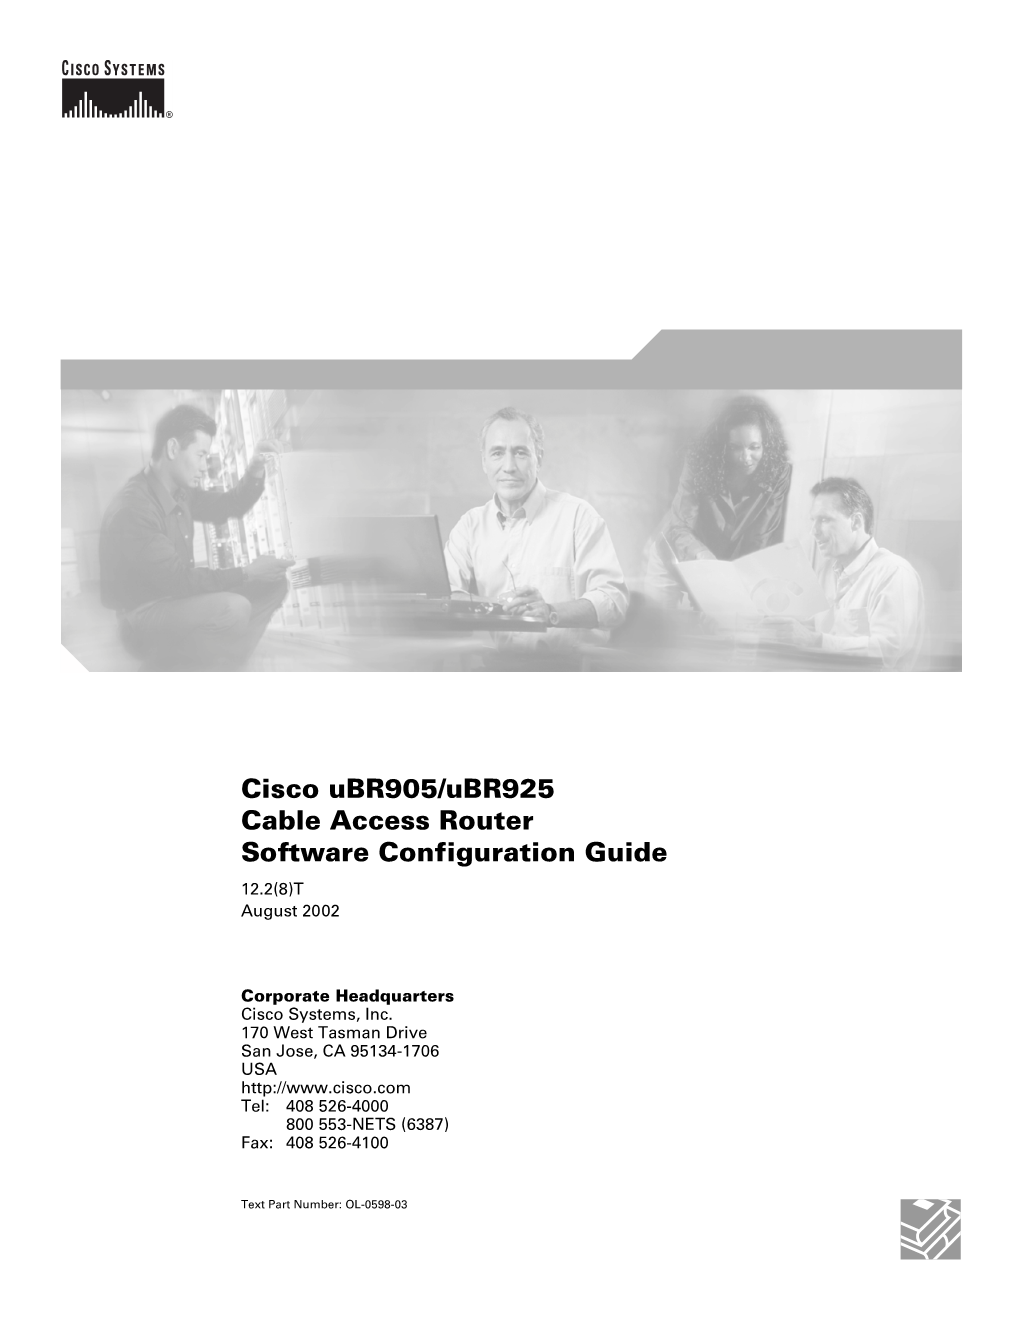 Cisco Ubr905/Ubr925 Router Software Configuration Guide